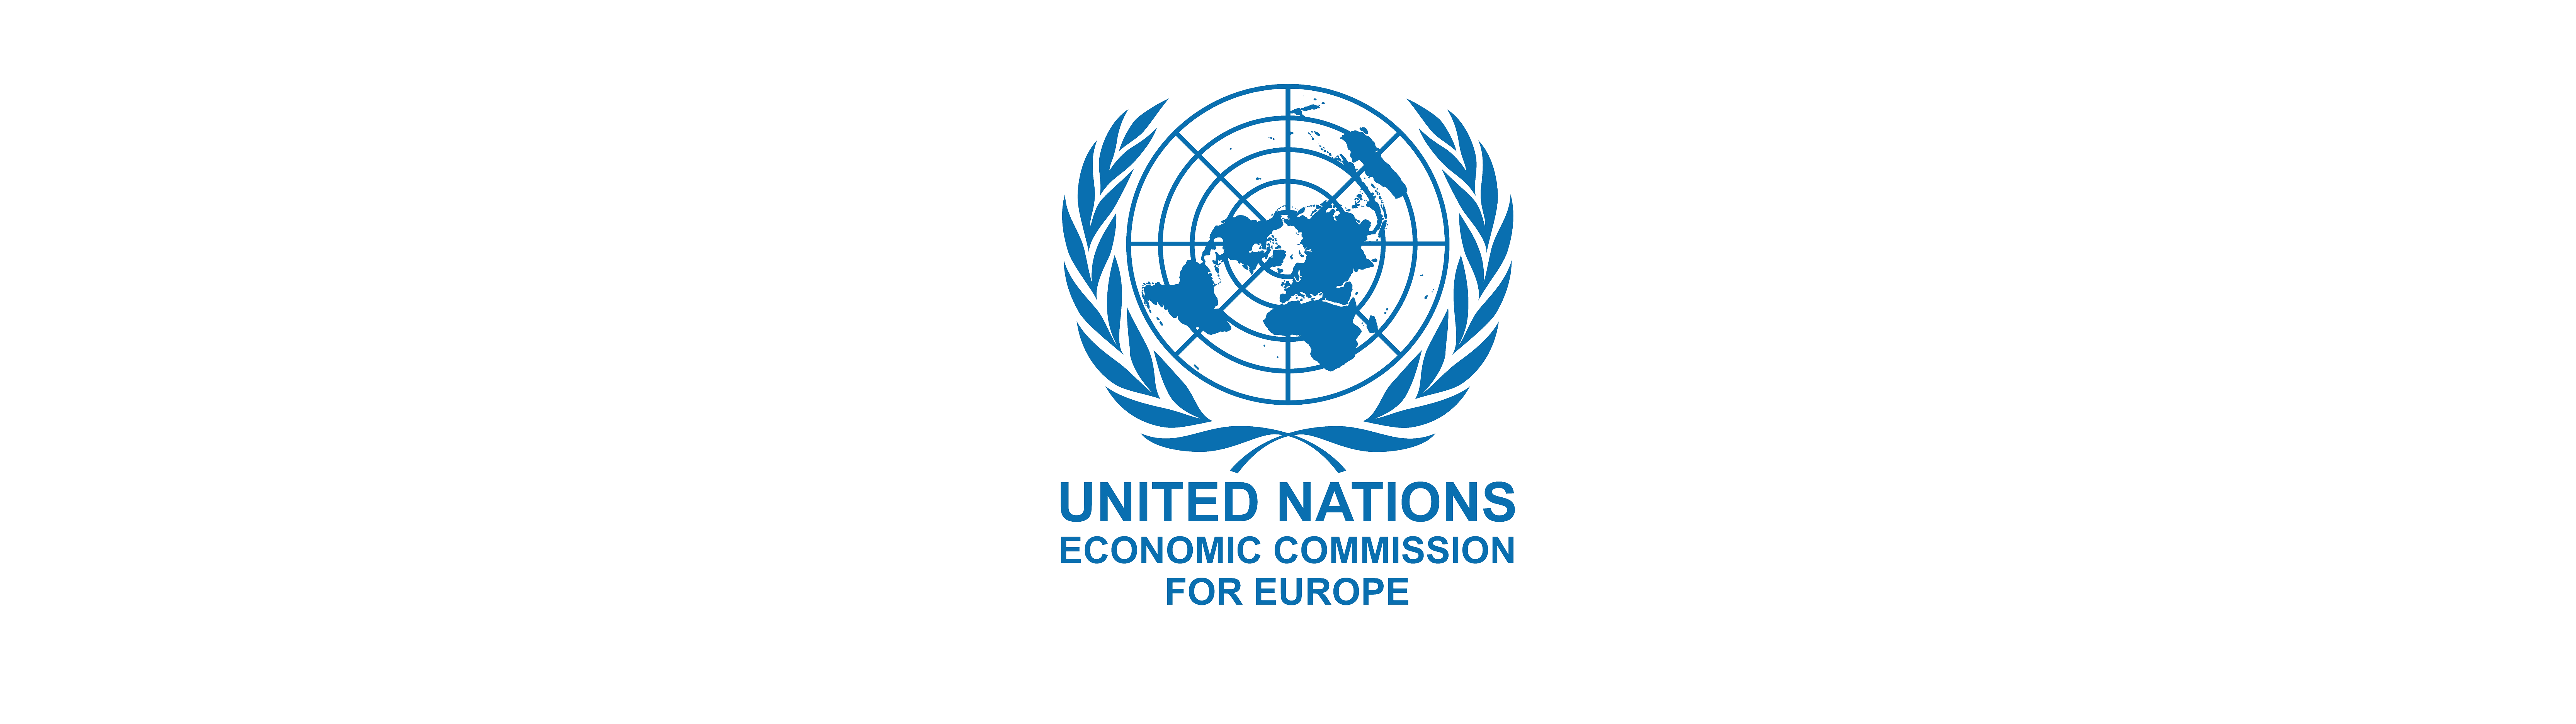 Европейская комиссия оон. Экономическая комиссия ООН. Лого европейской экономической комиссии ООН. Логотип ООН.